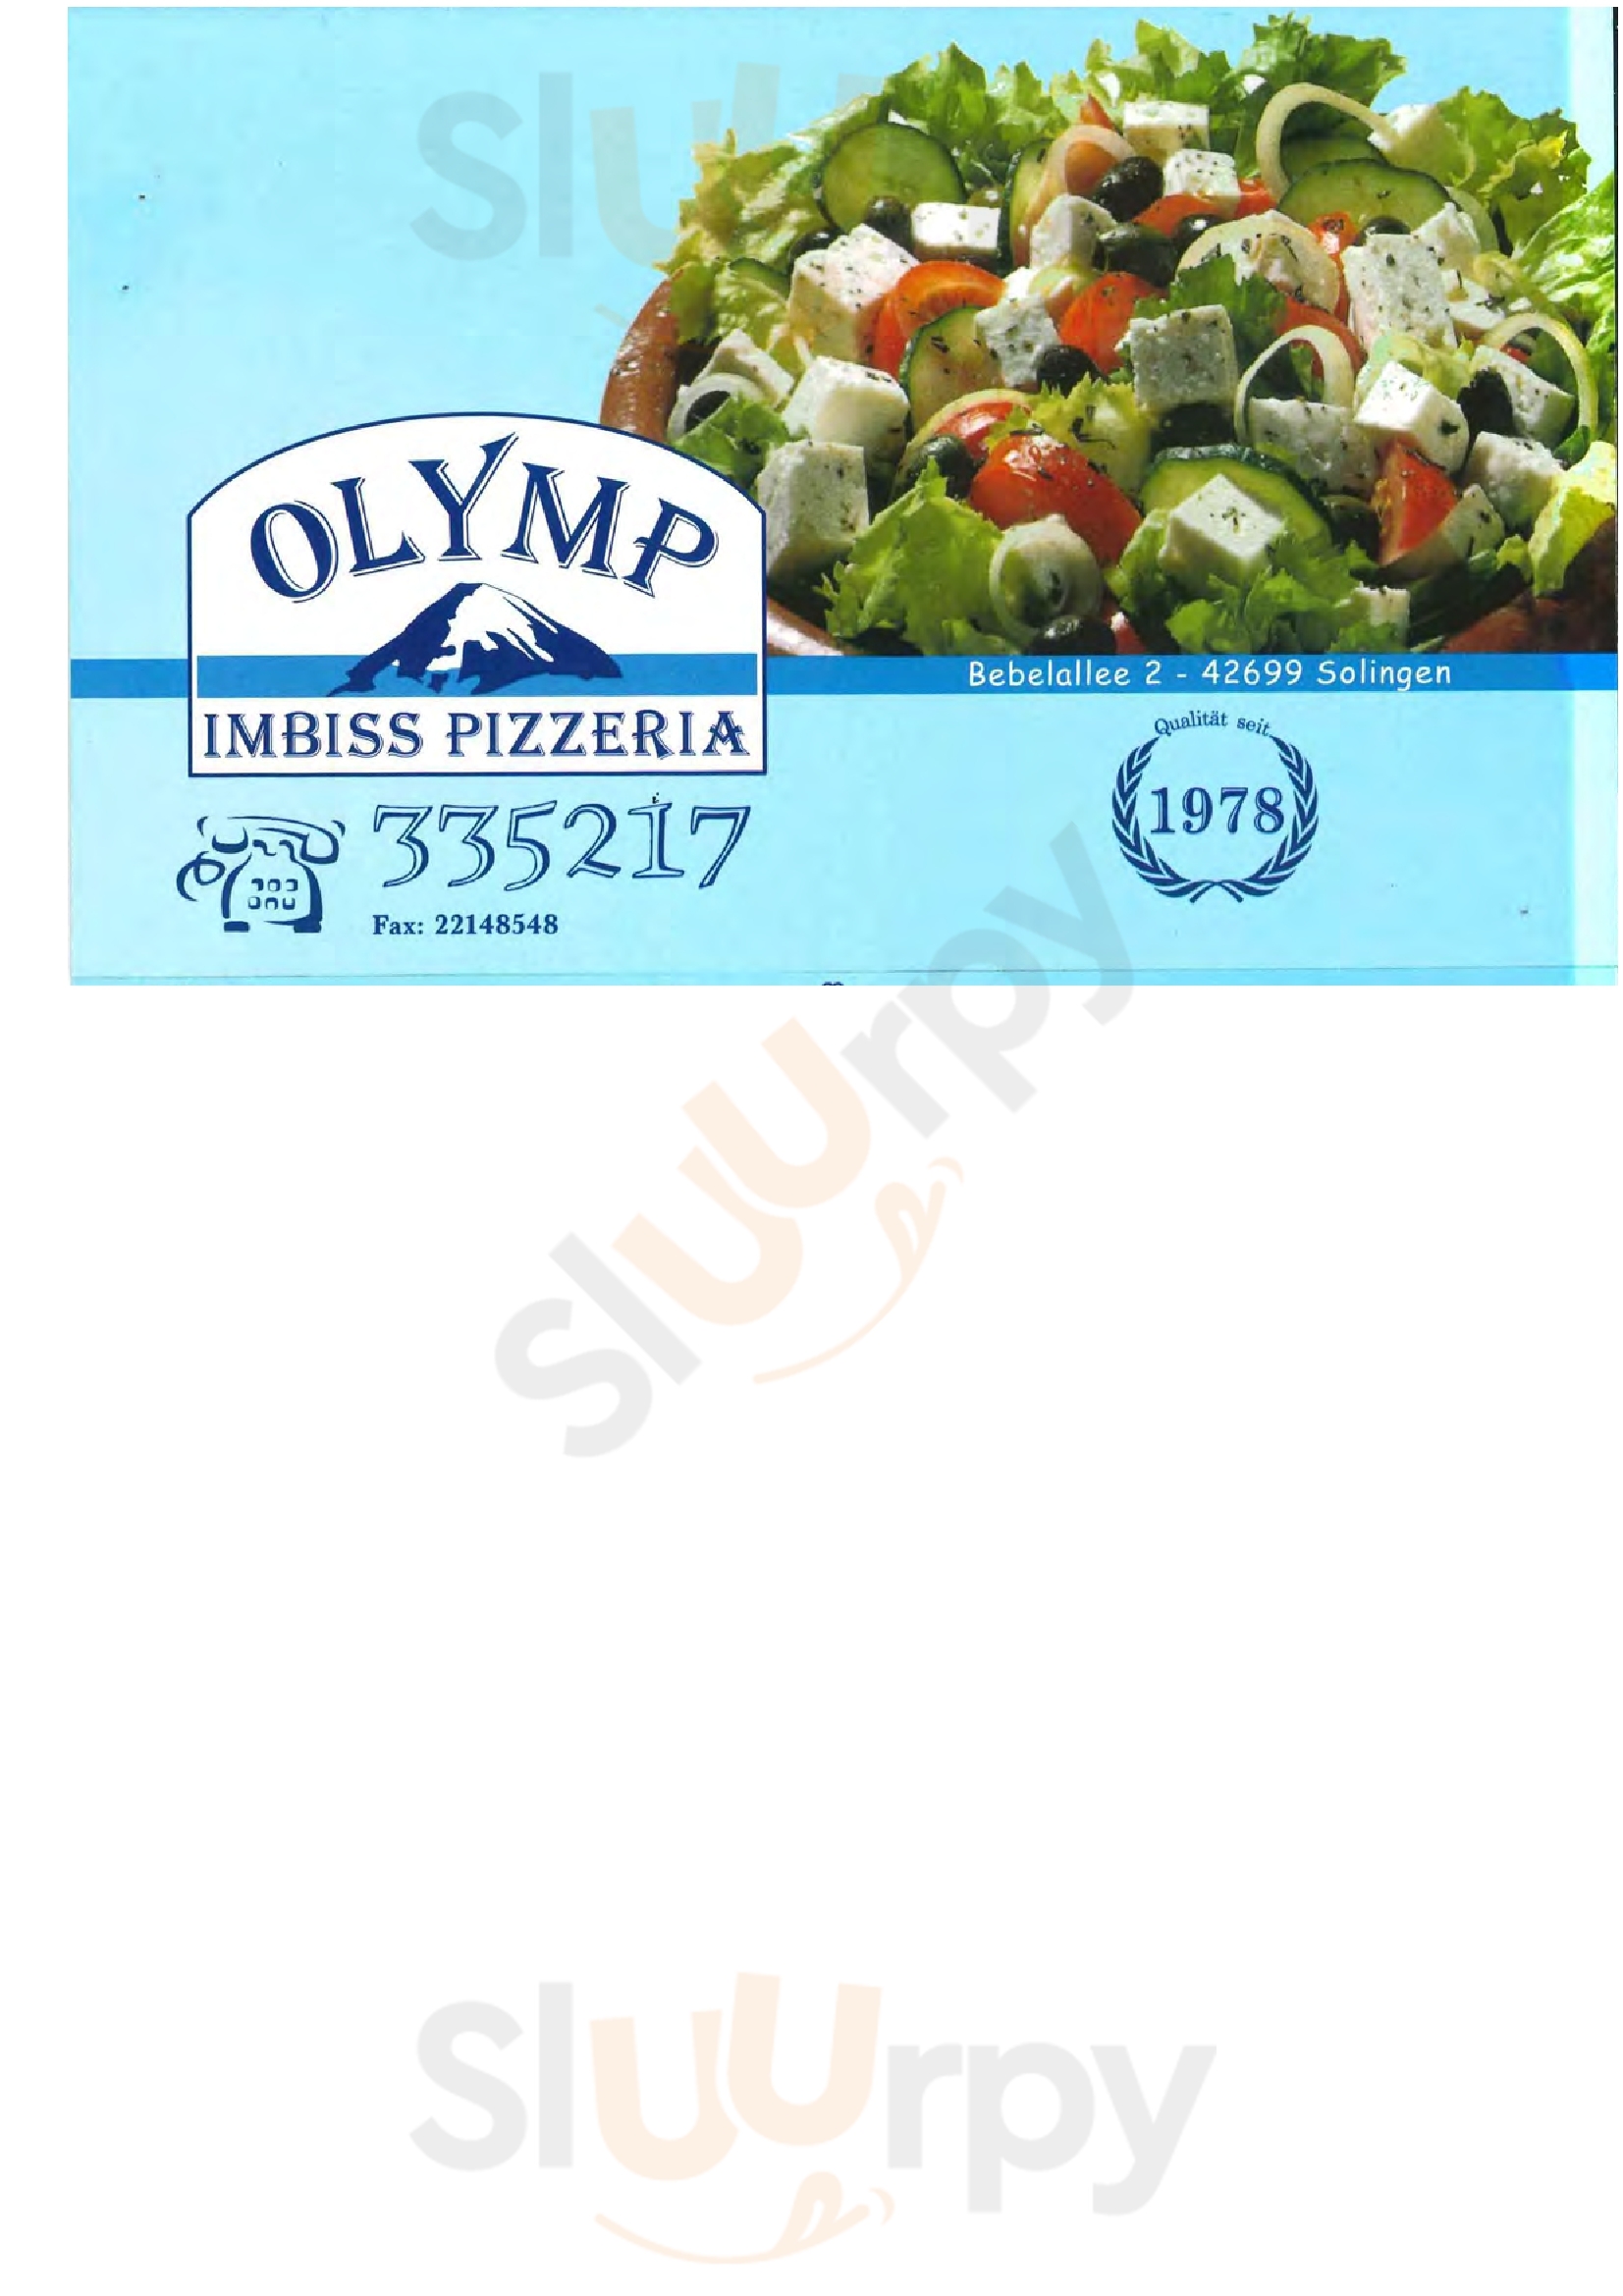 Olymp Imbiss Pizzeria Solingen Menu - 1